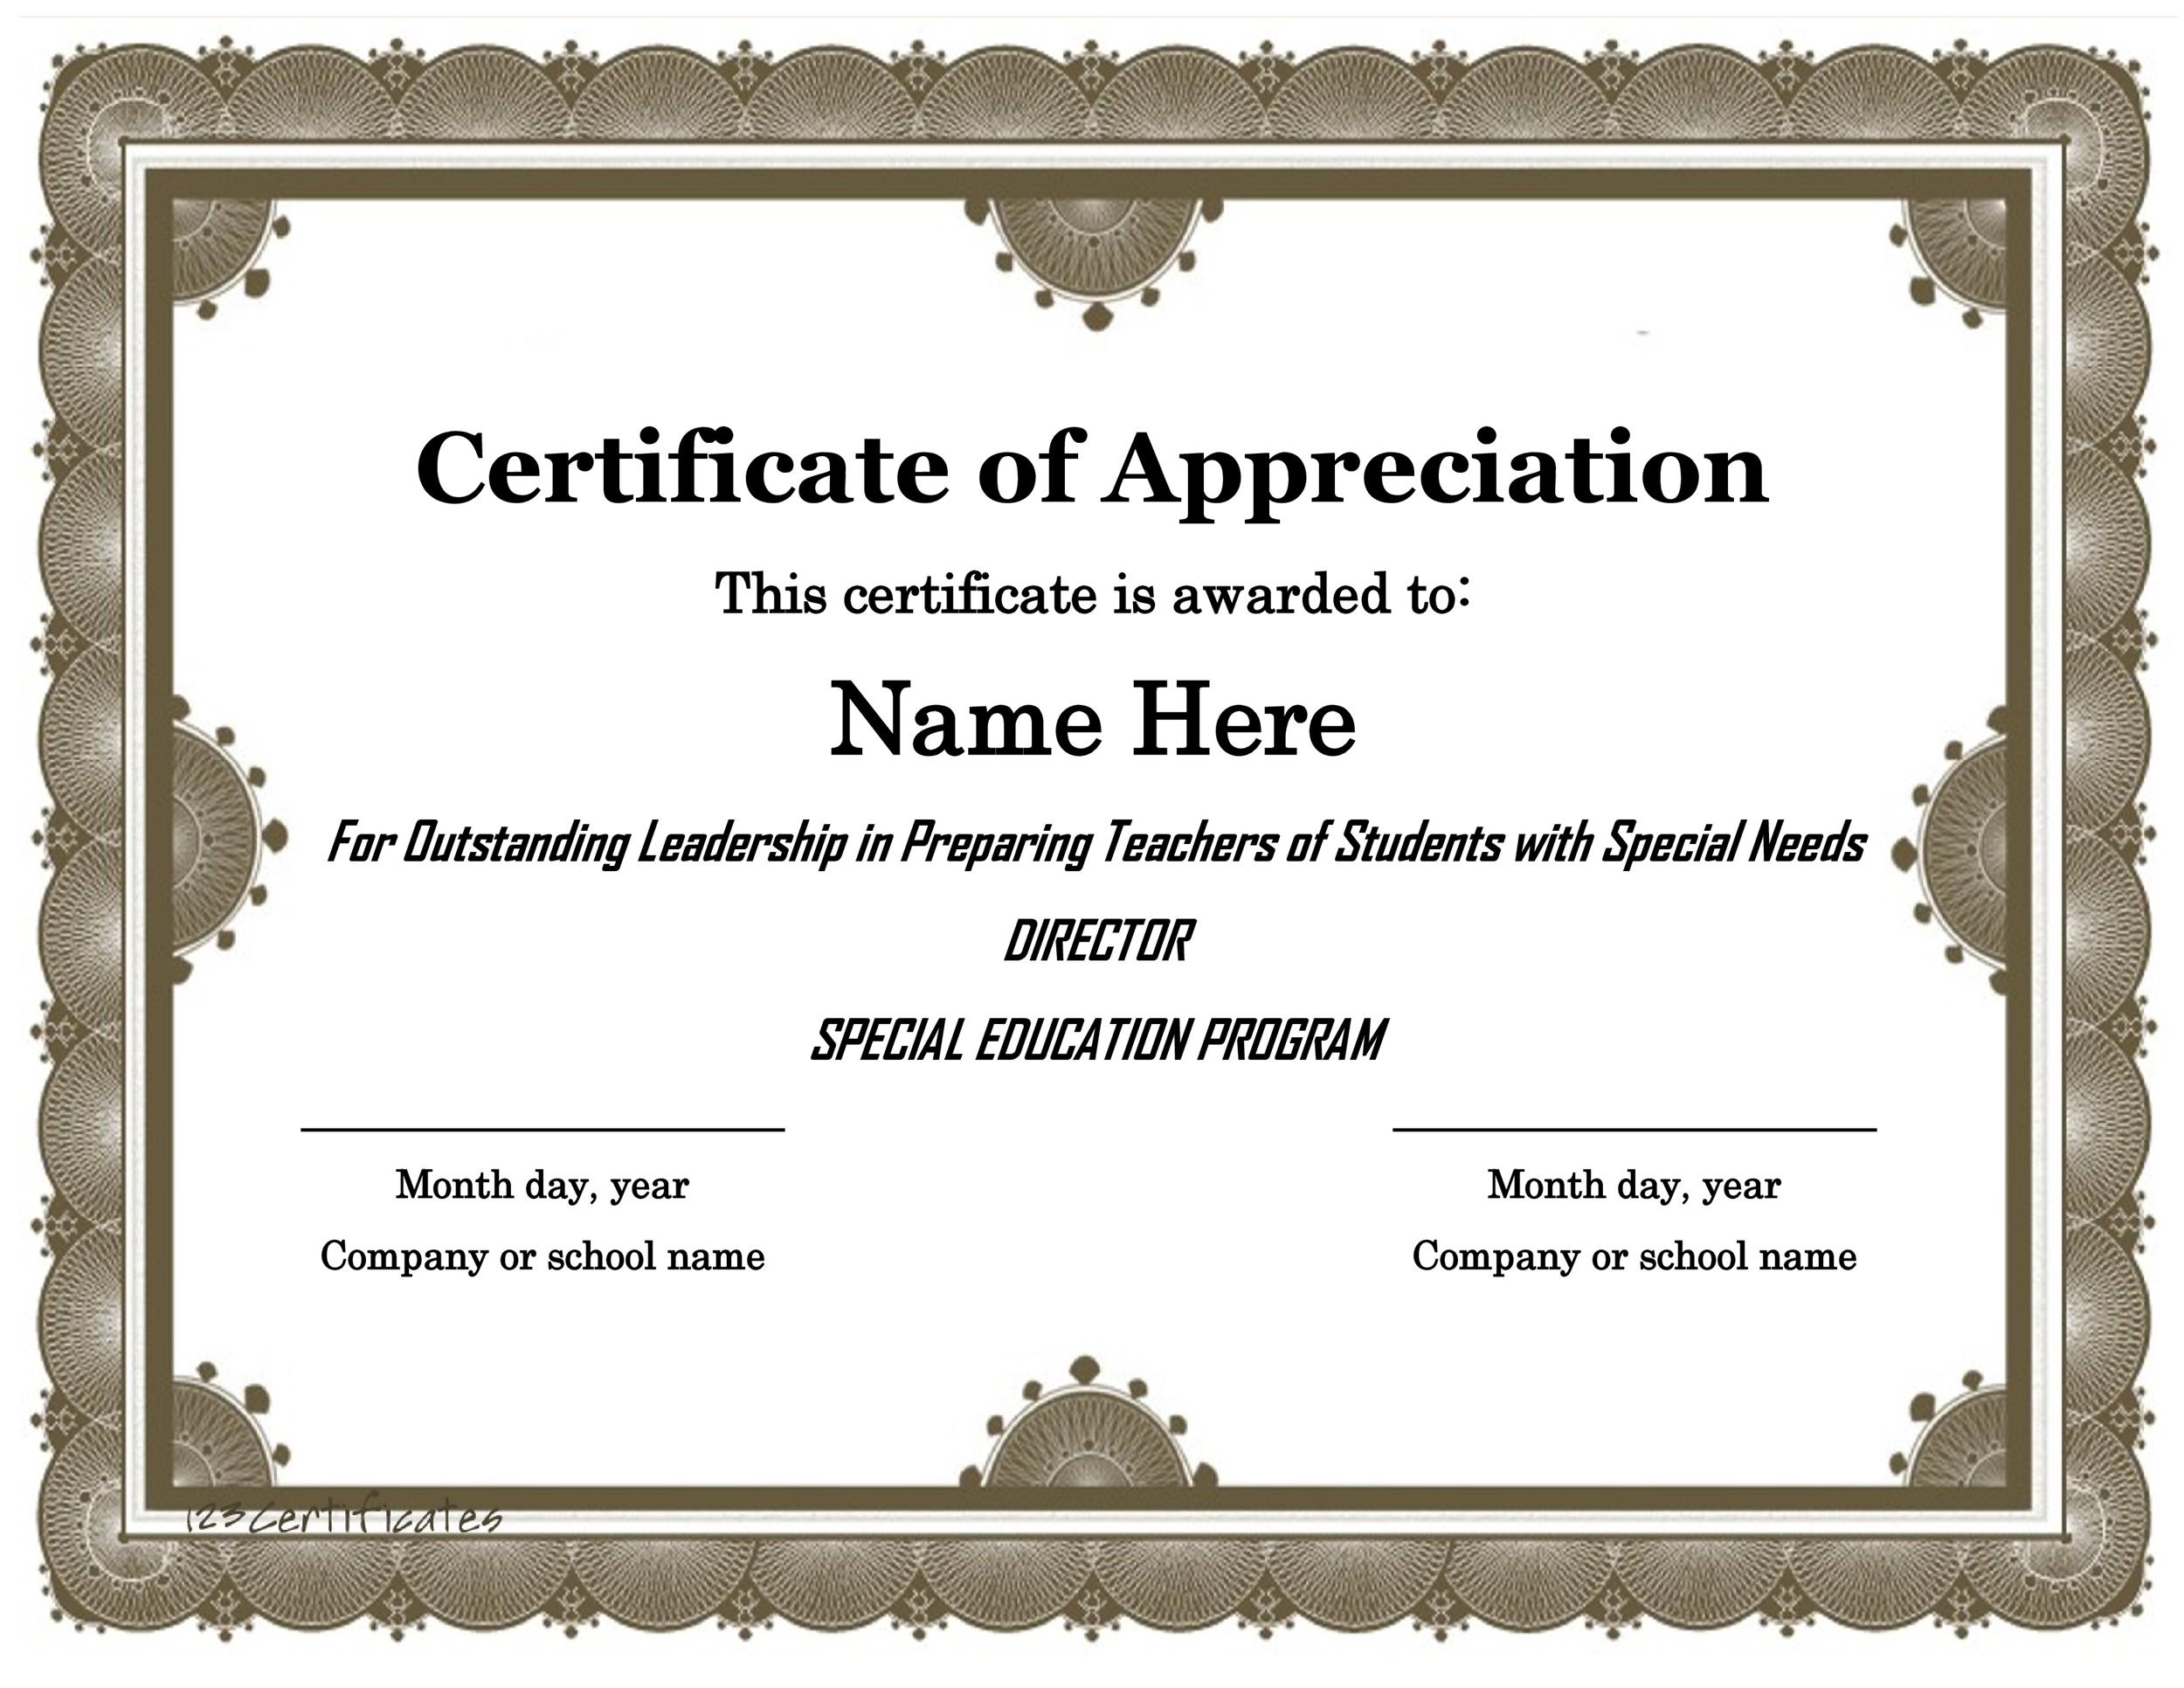 Special thanks to. Certificate of Appreciation. Certificate шаблон. Сертификат на английском. Макет сертификата по английскому языку.